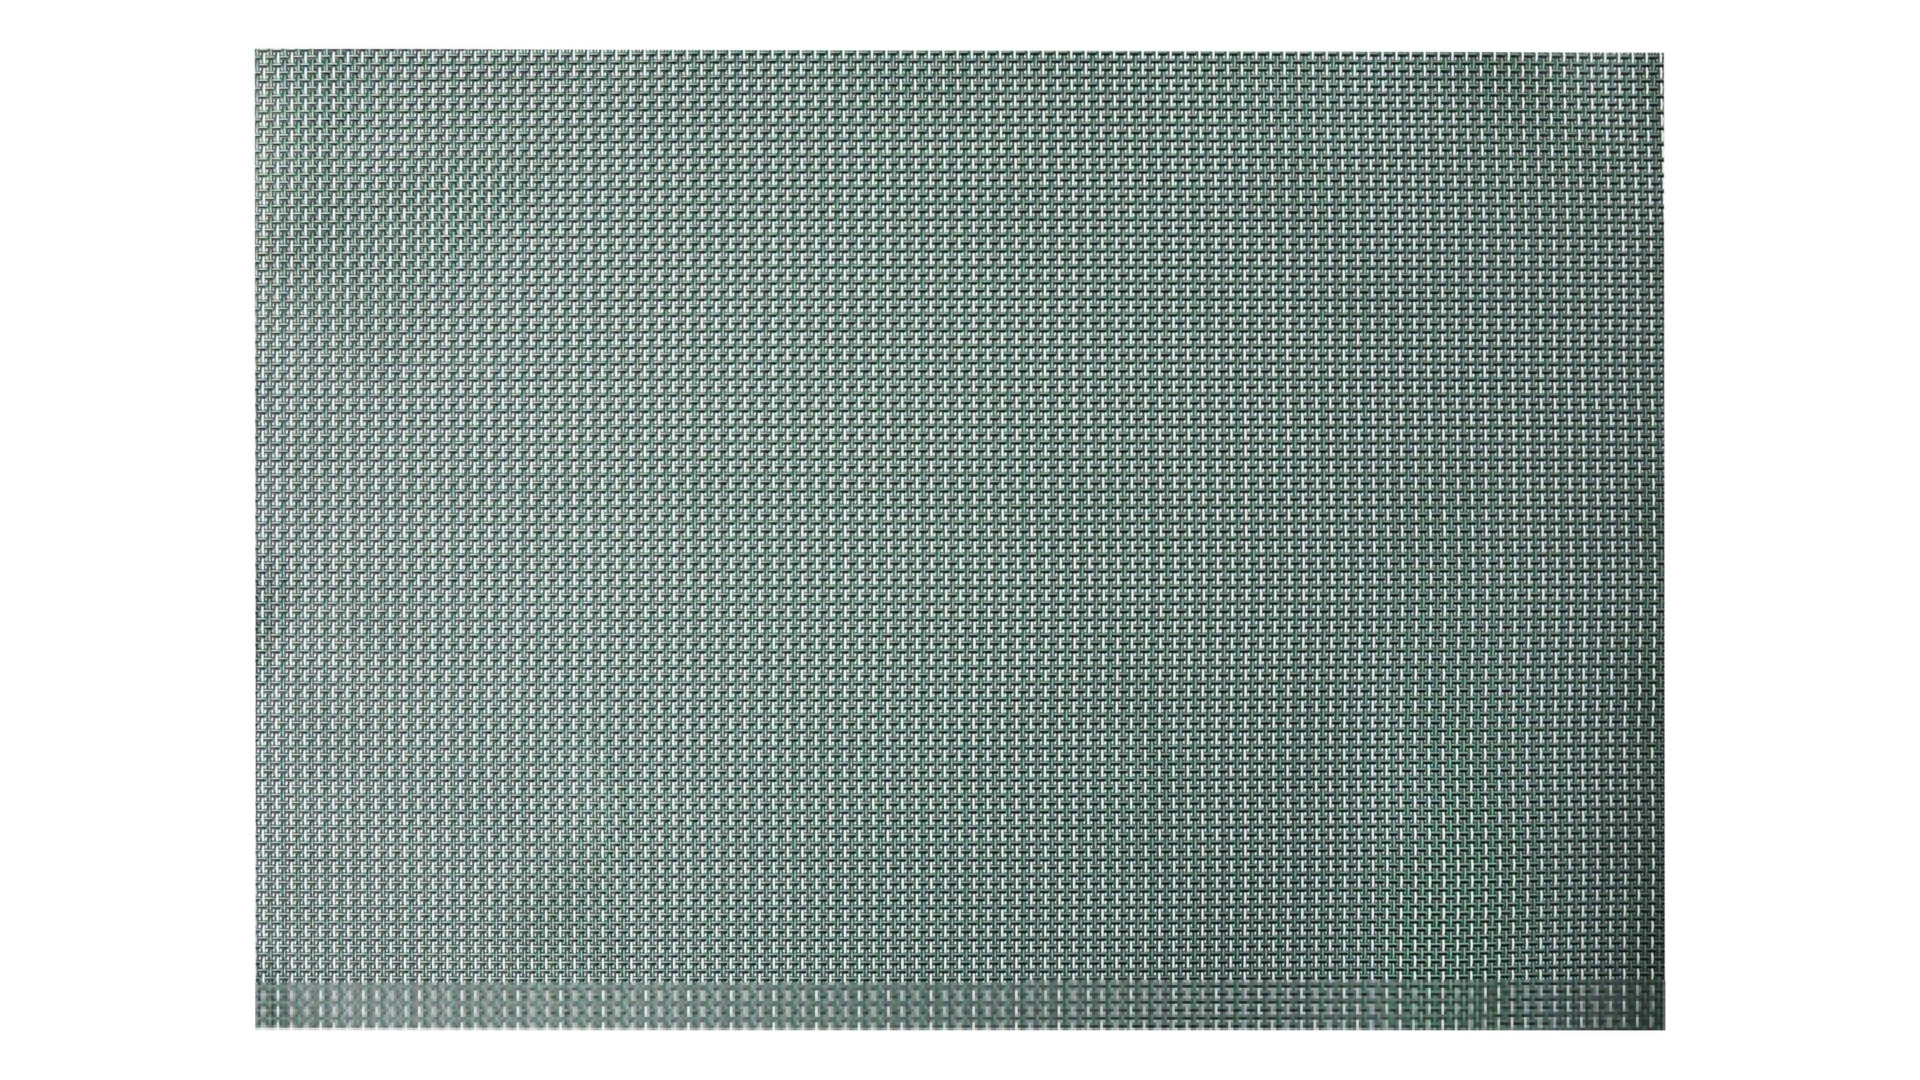 Салфетка подстановочная прямоугольная WO HOME OAK 33х48 см, двусторонняя, зеленая, ПВХ, полиэстер